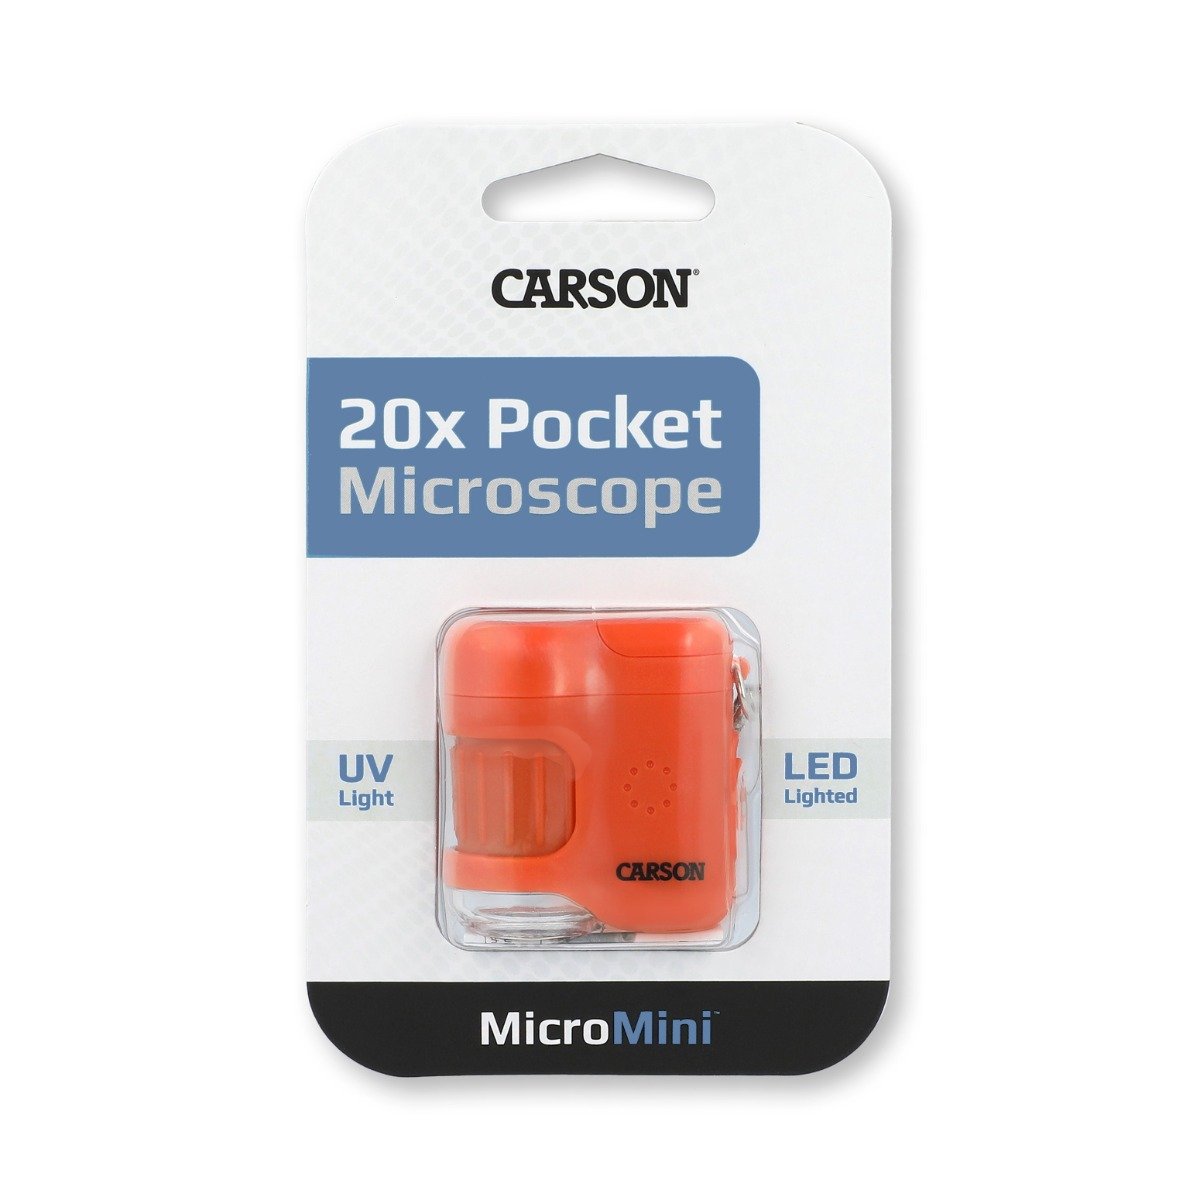 Microscop portabil cu breloc, marire 20x, Carson, MicroMini, Orange